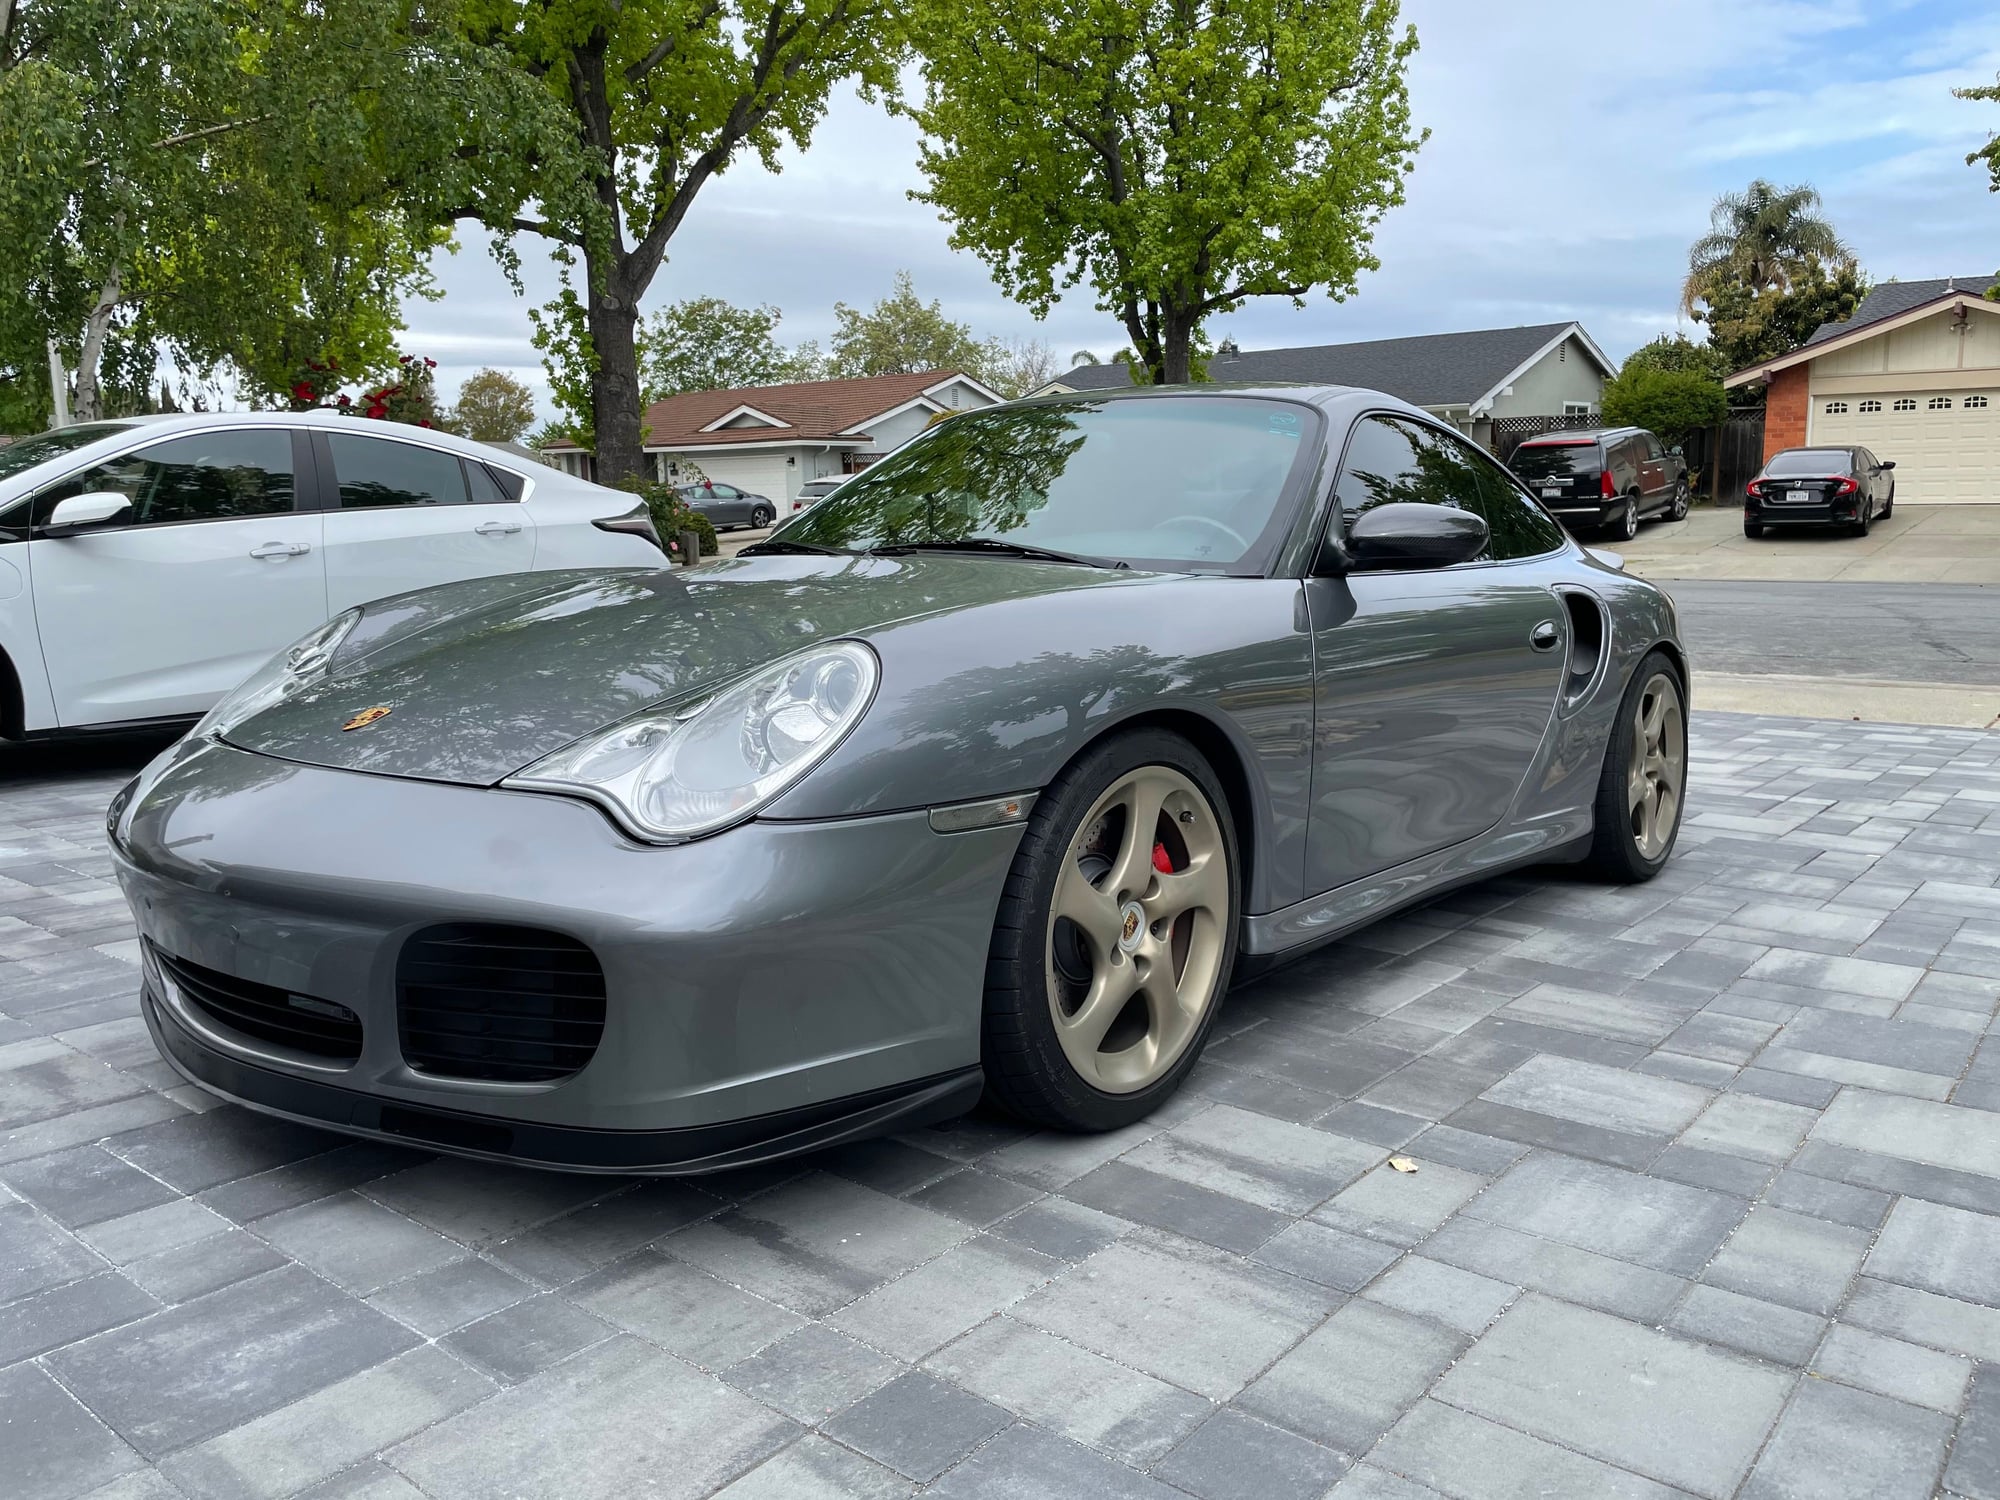 2002 Porsche 911 - 2002 Porsche 911 Turbo w/Markski 850HP Kit - Used - VIN WP0AB29982S685951 - 66,831 Miles - 6 cyl - AWD - Manual - Coupe - Gray - Newark, CA 94560, United States